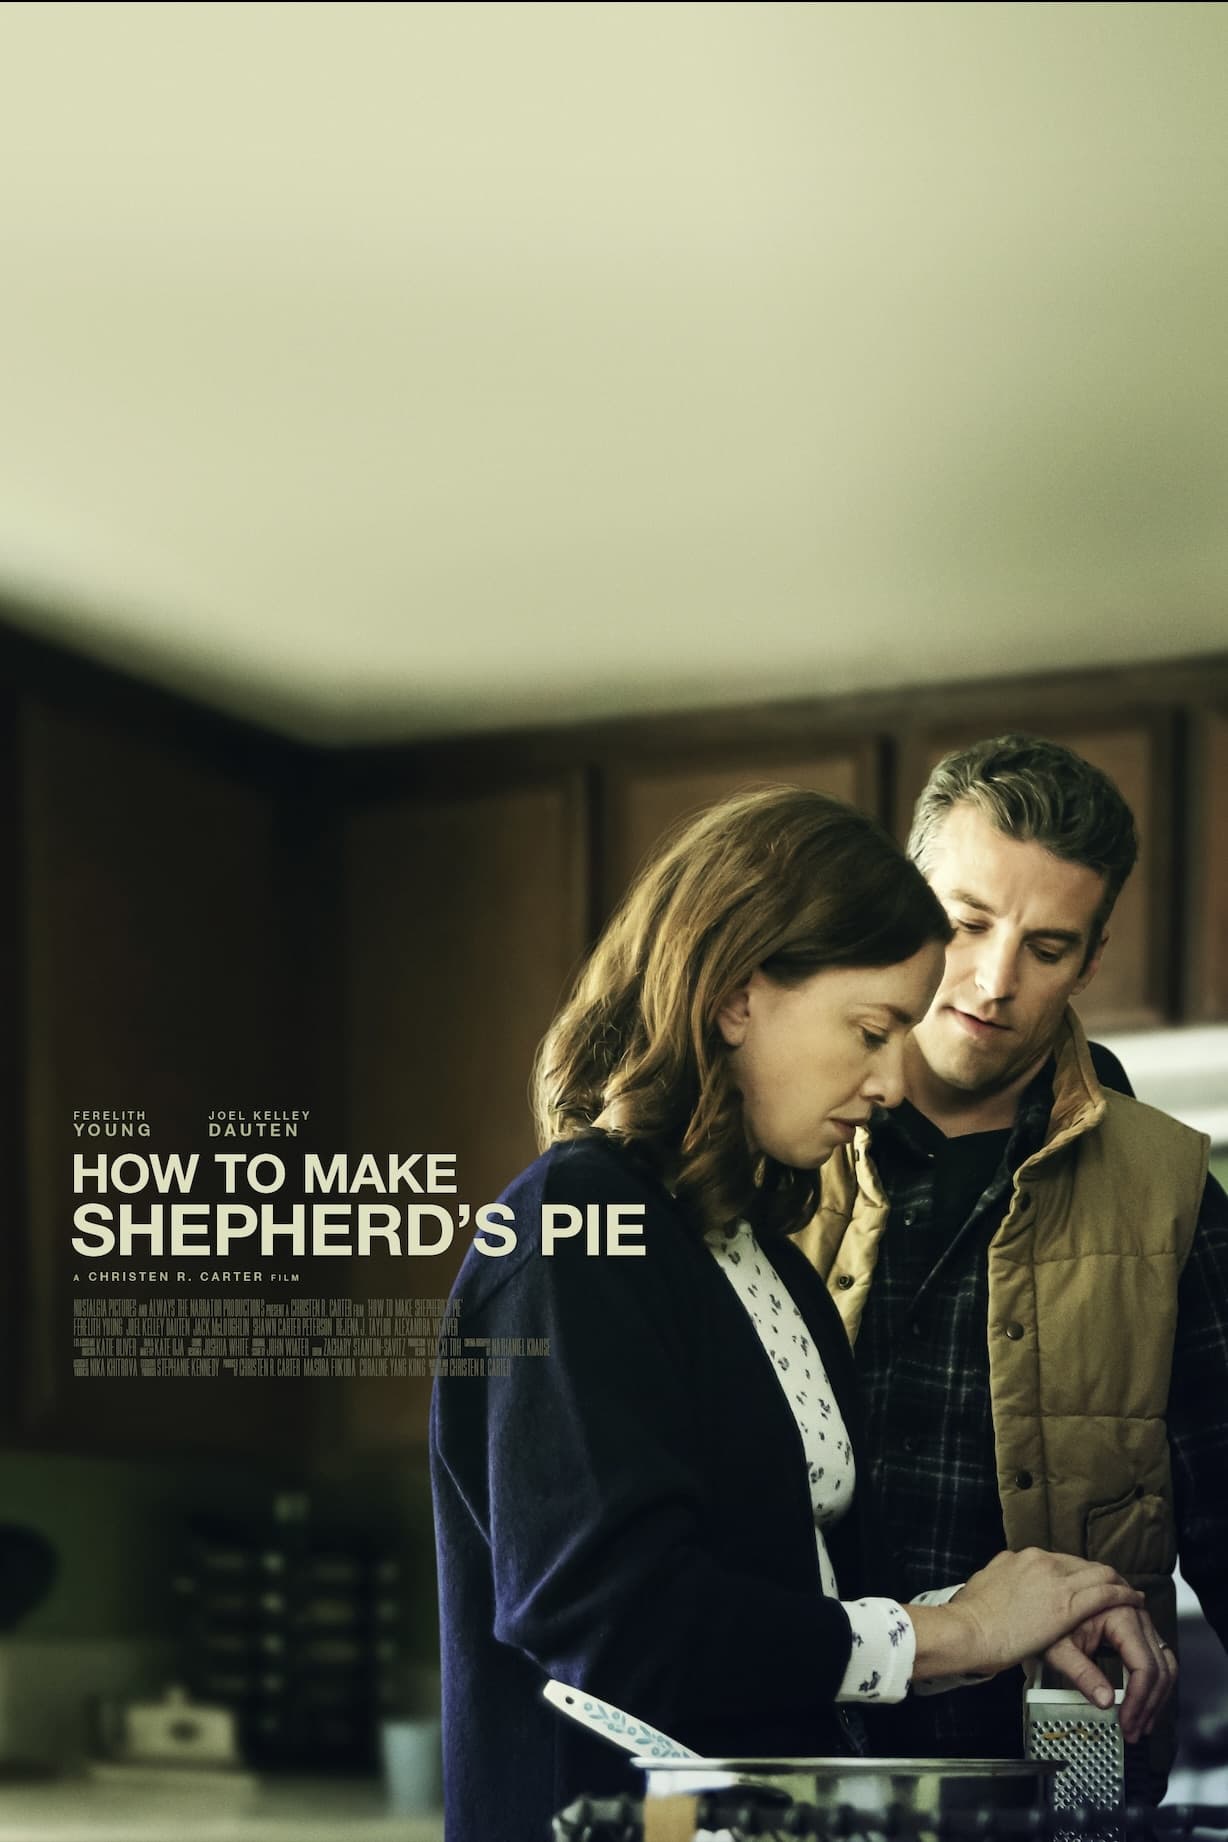 How to Make Shepherd's Pie